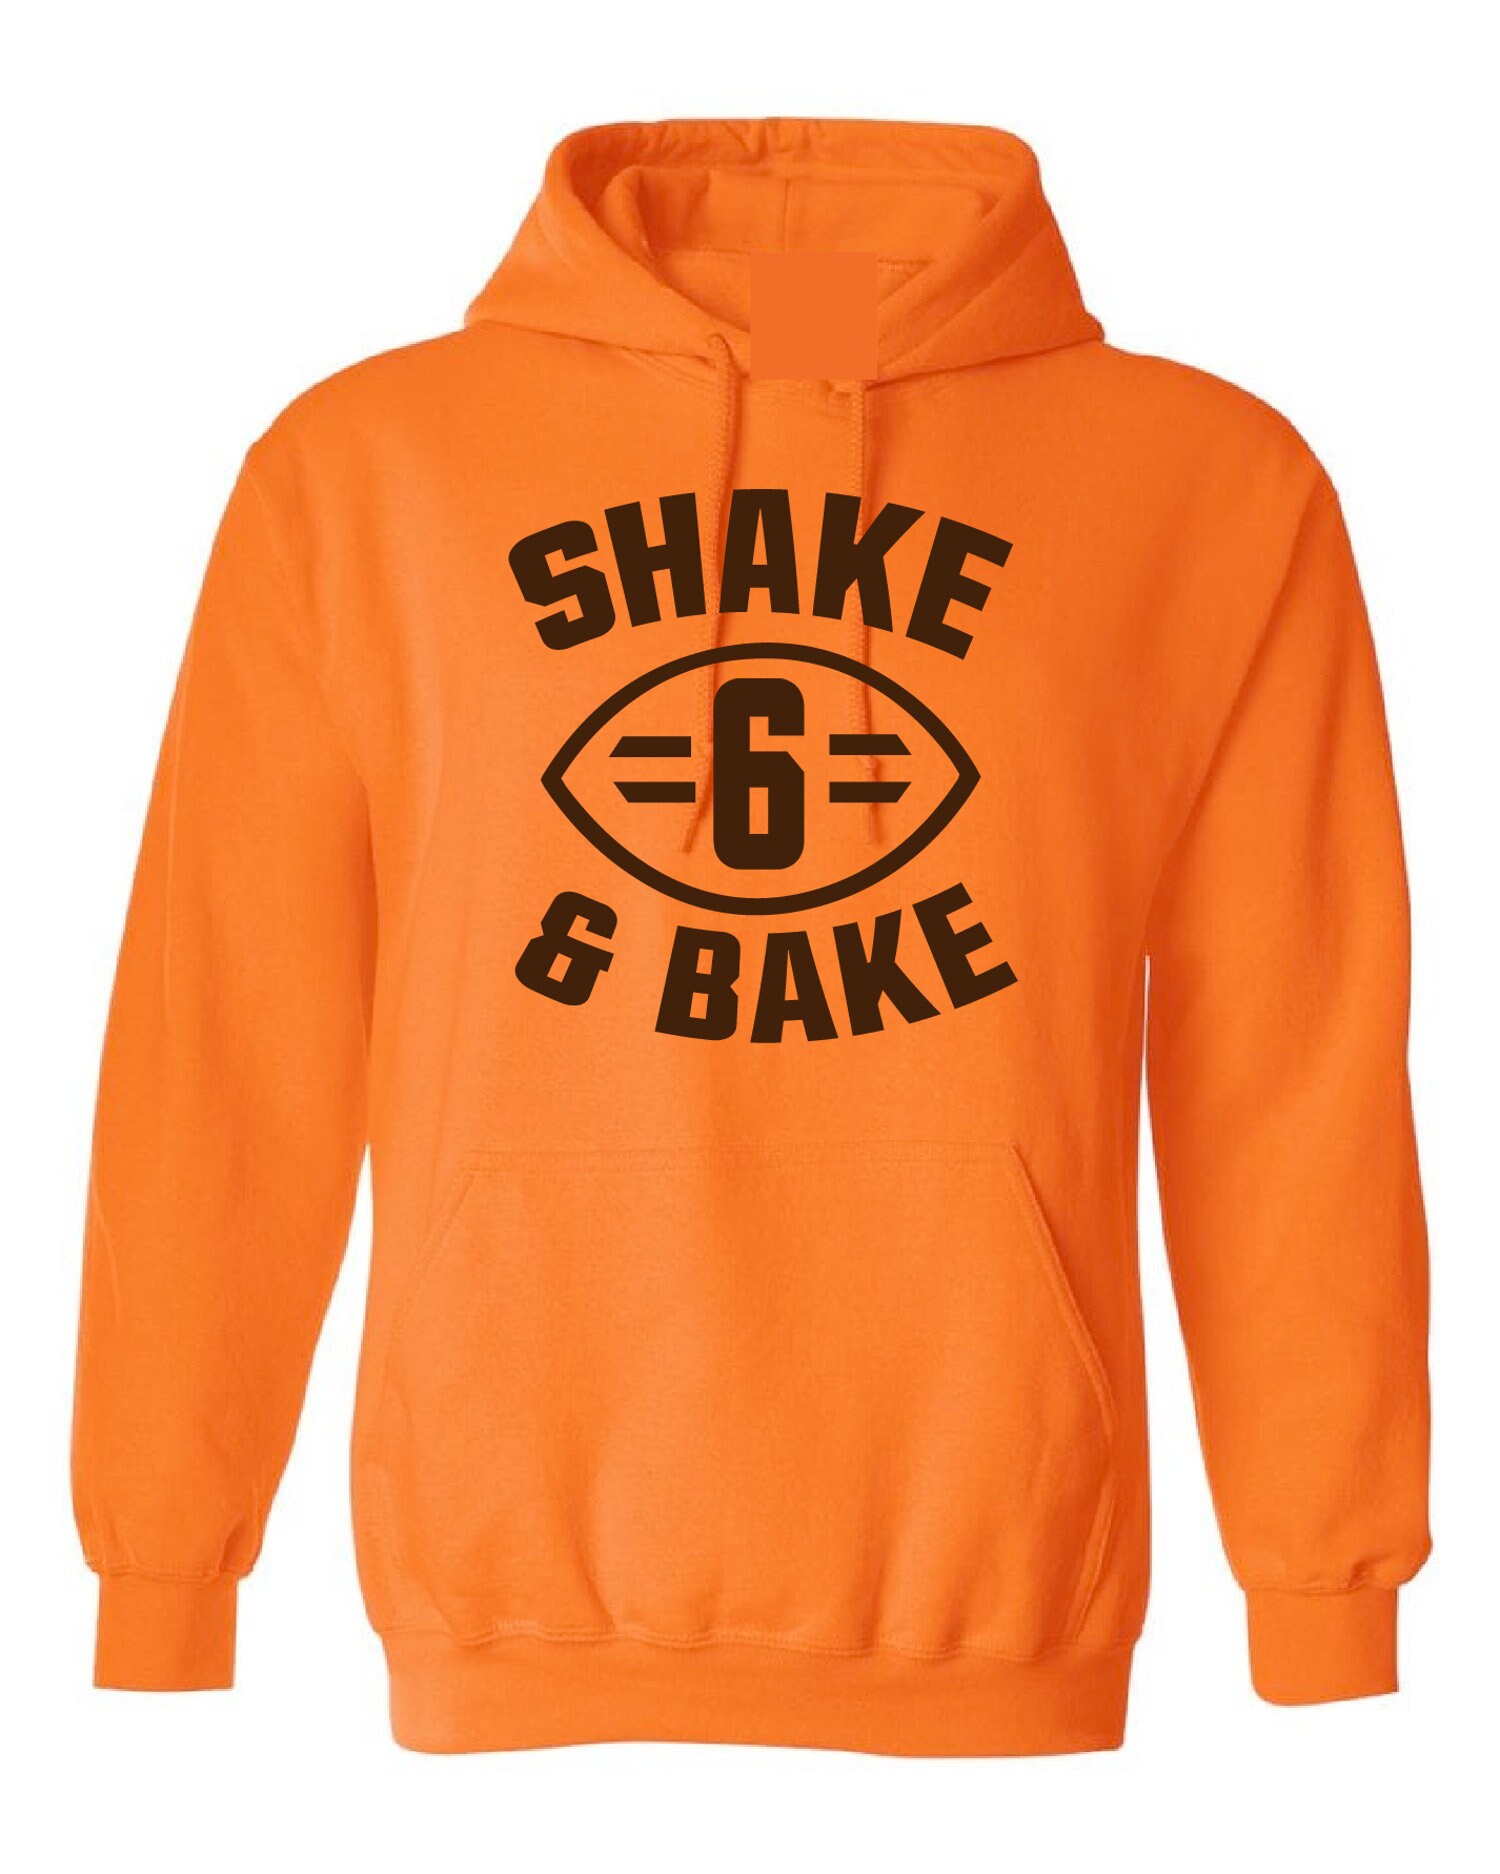 Shake & Bake Hoodie | Etsy